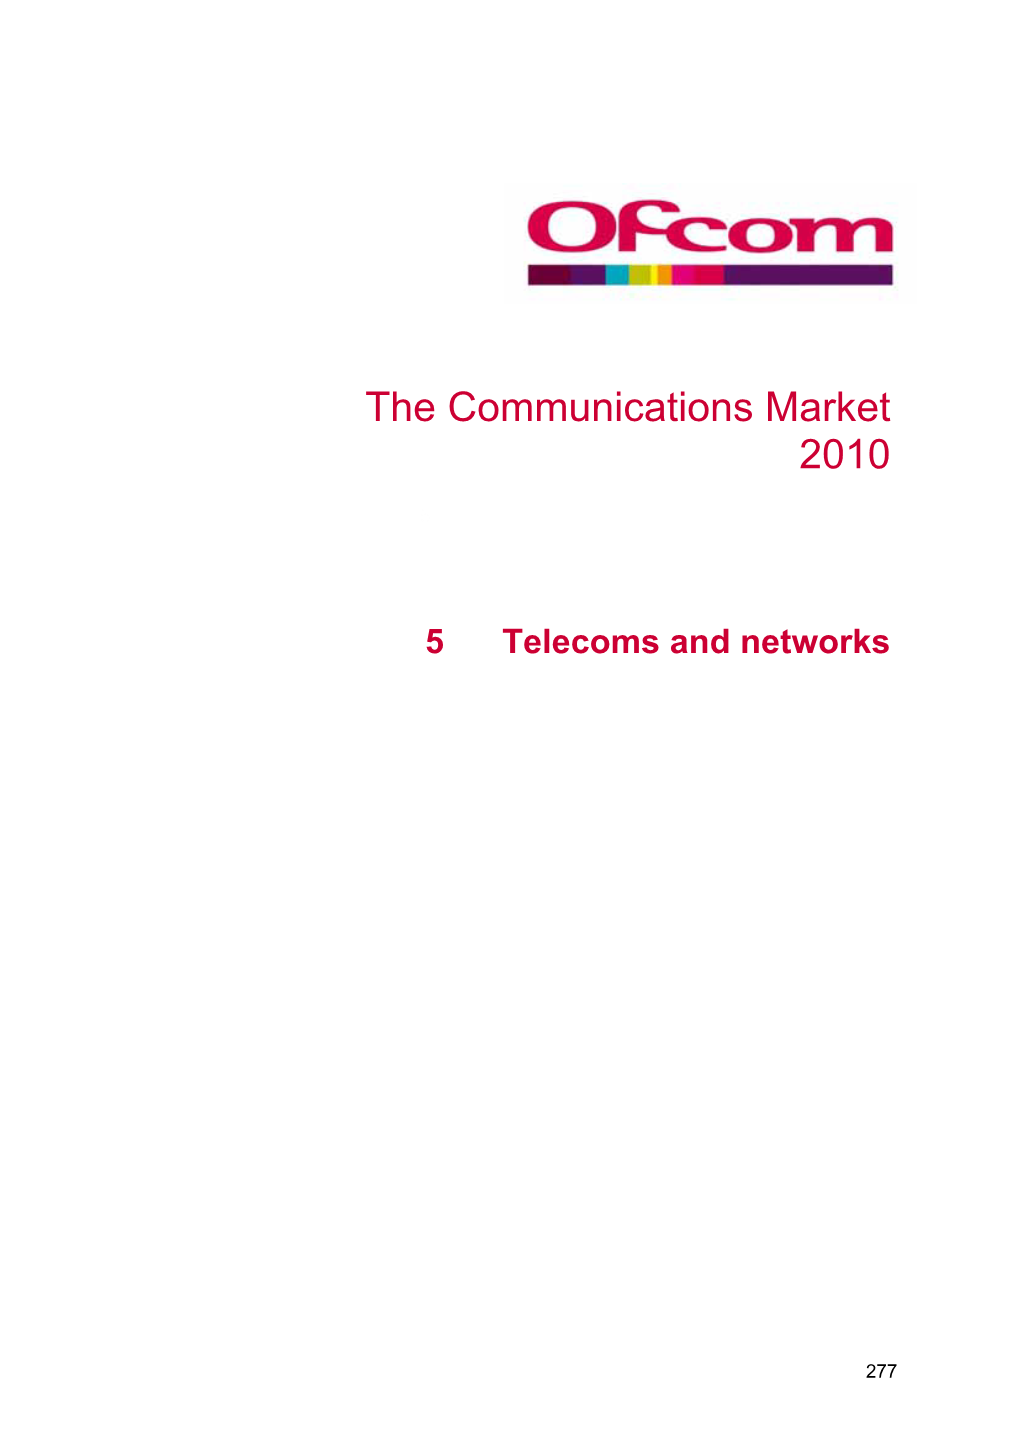 The Communications Market 2010